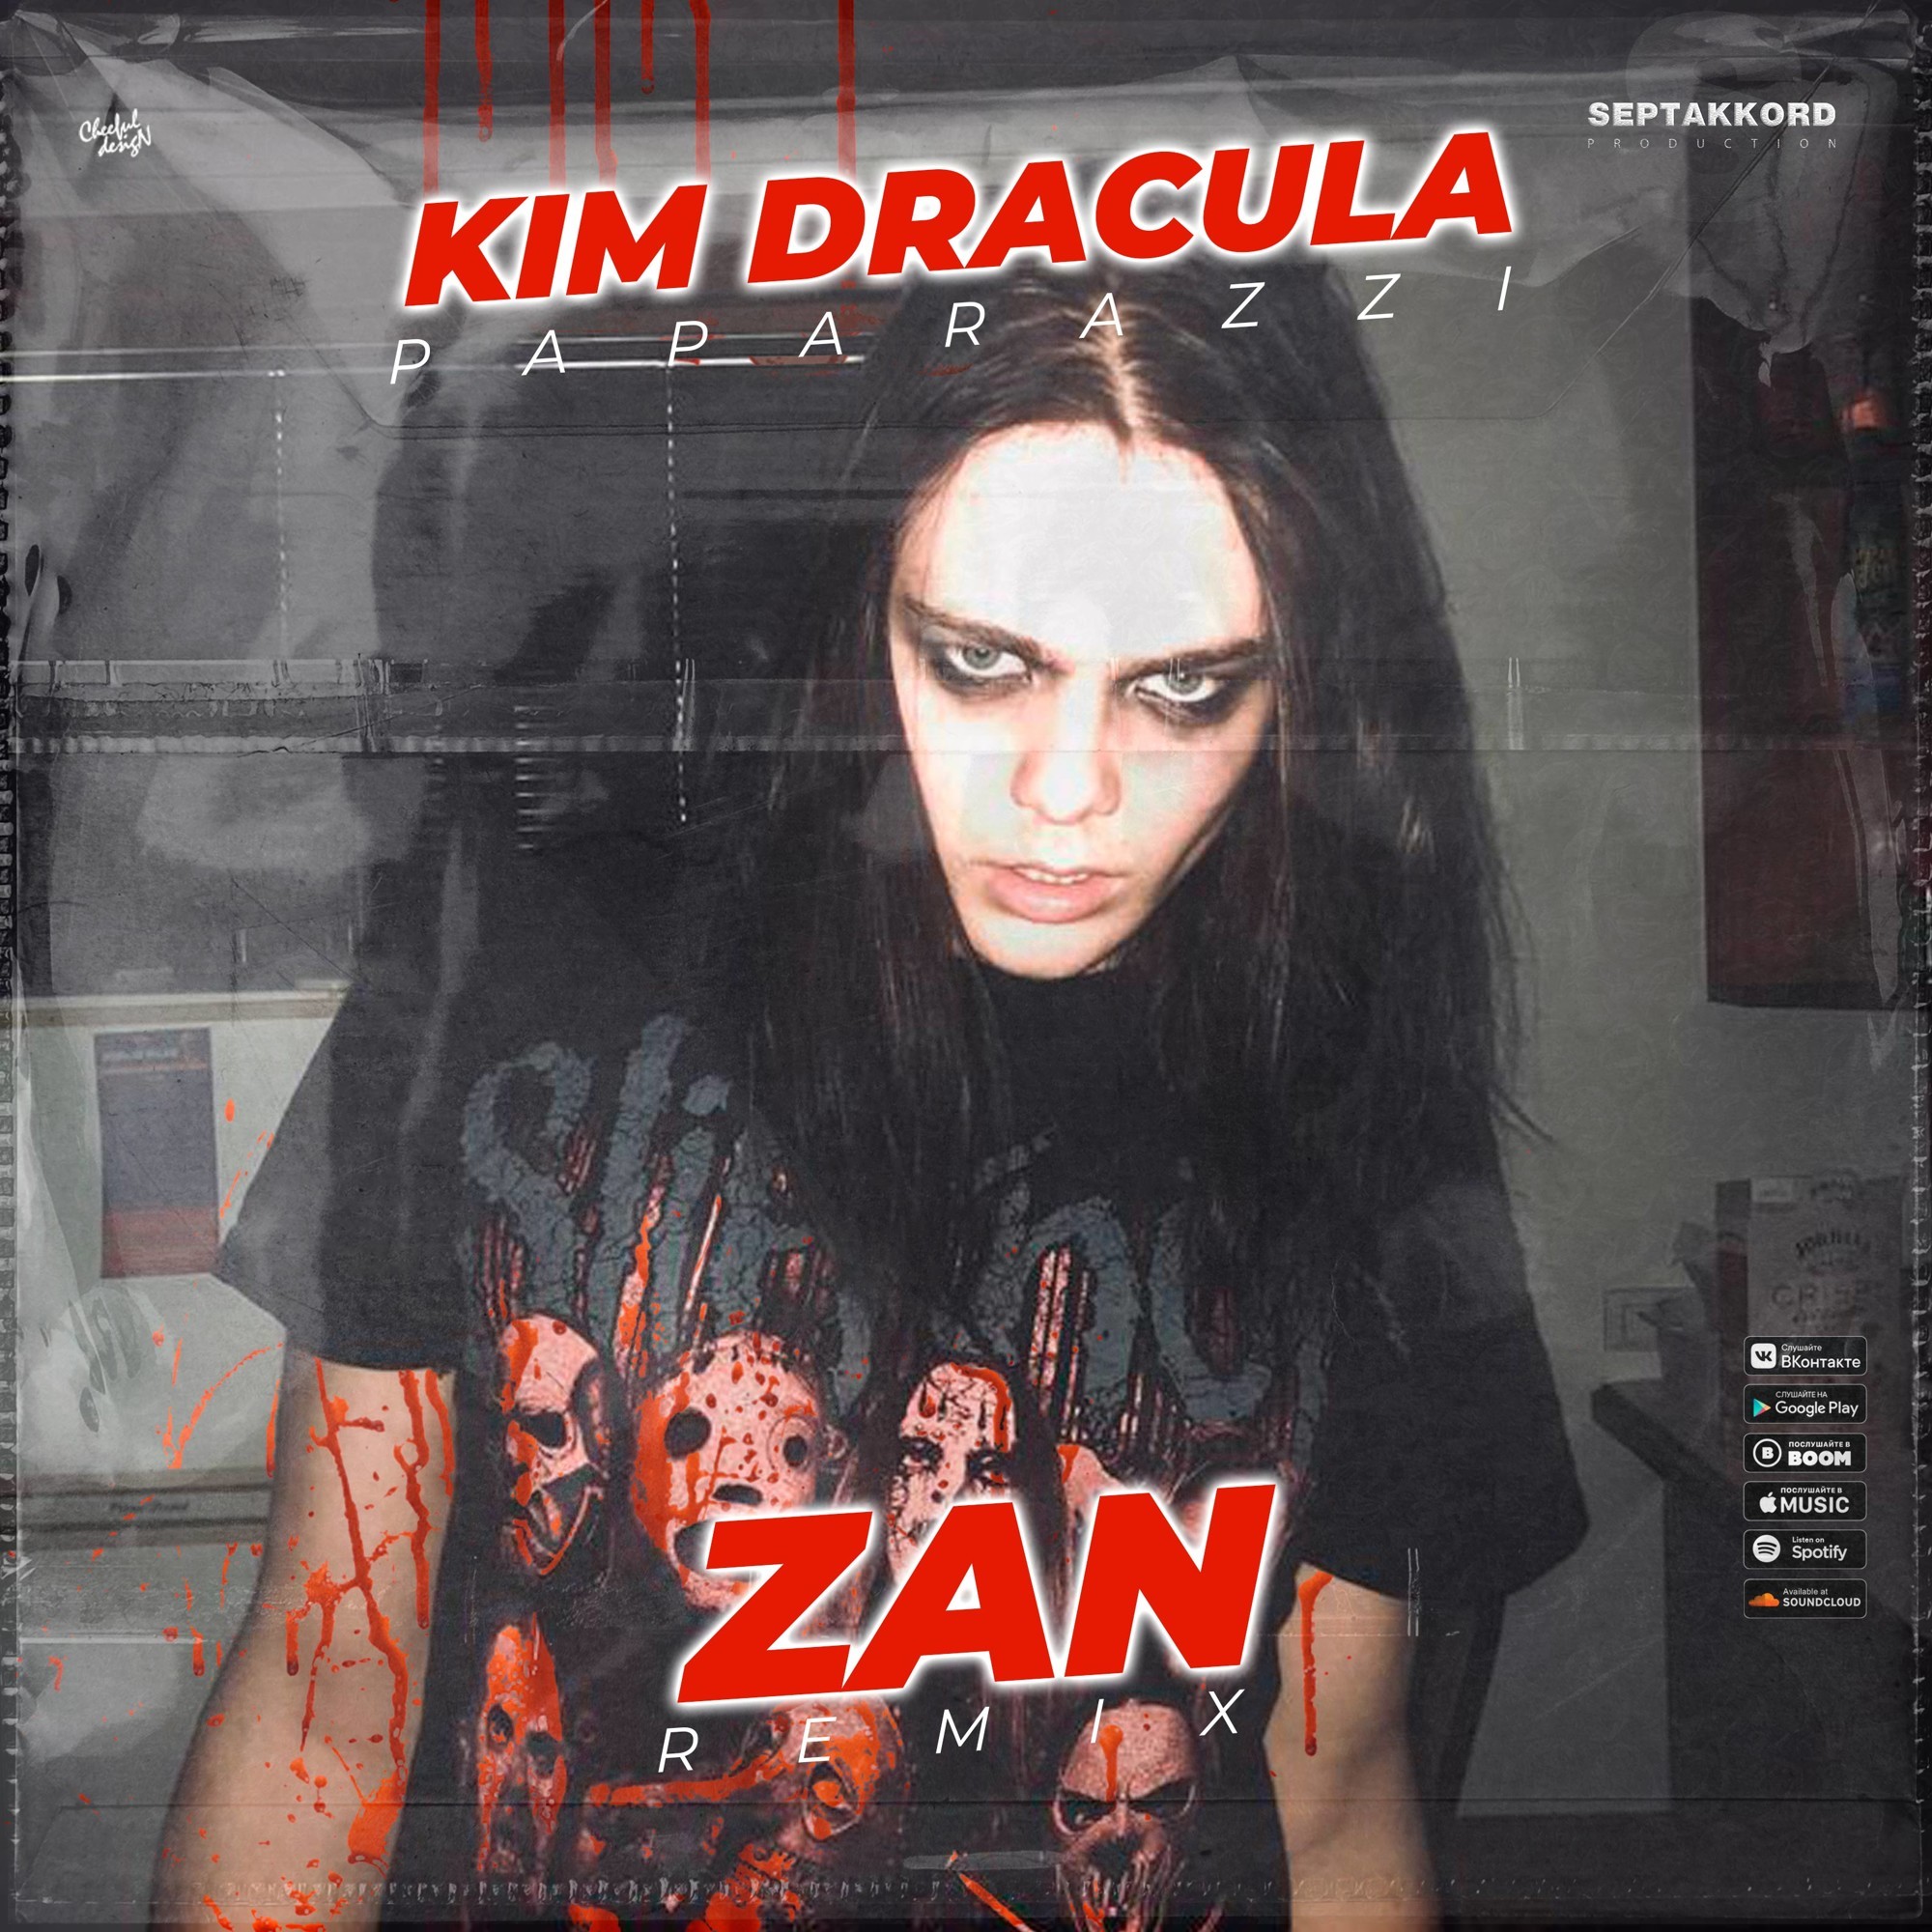 Kim Dracula Paparazzi (ZAN Remix) SEPTAKKORD PRODUCTION